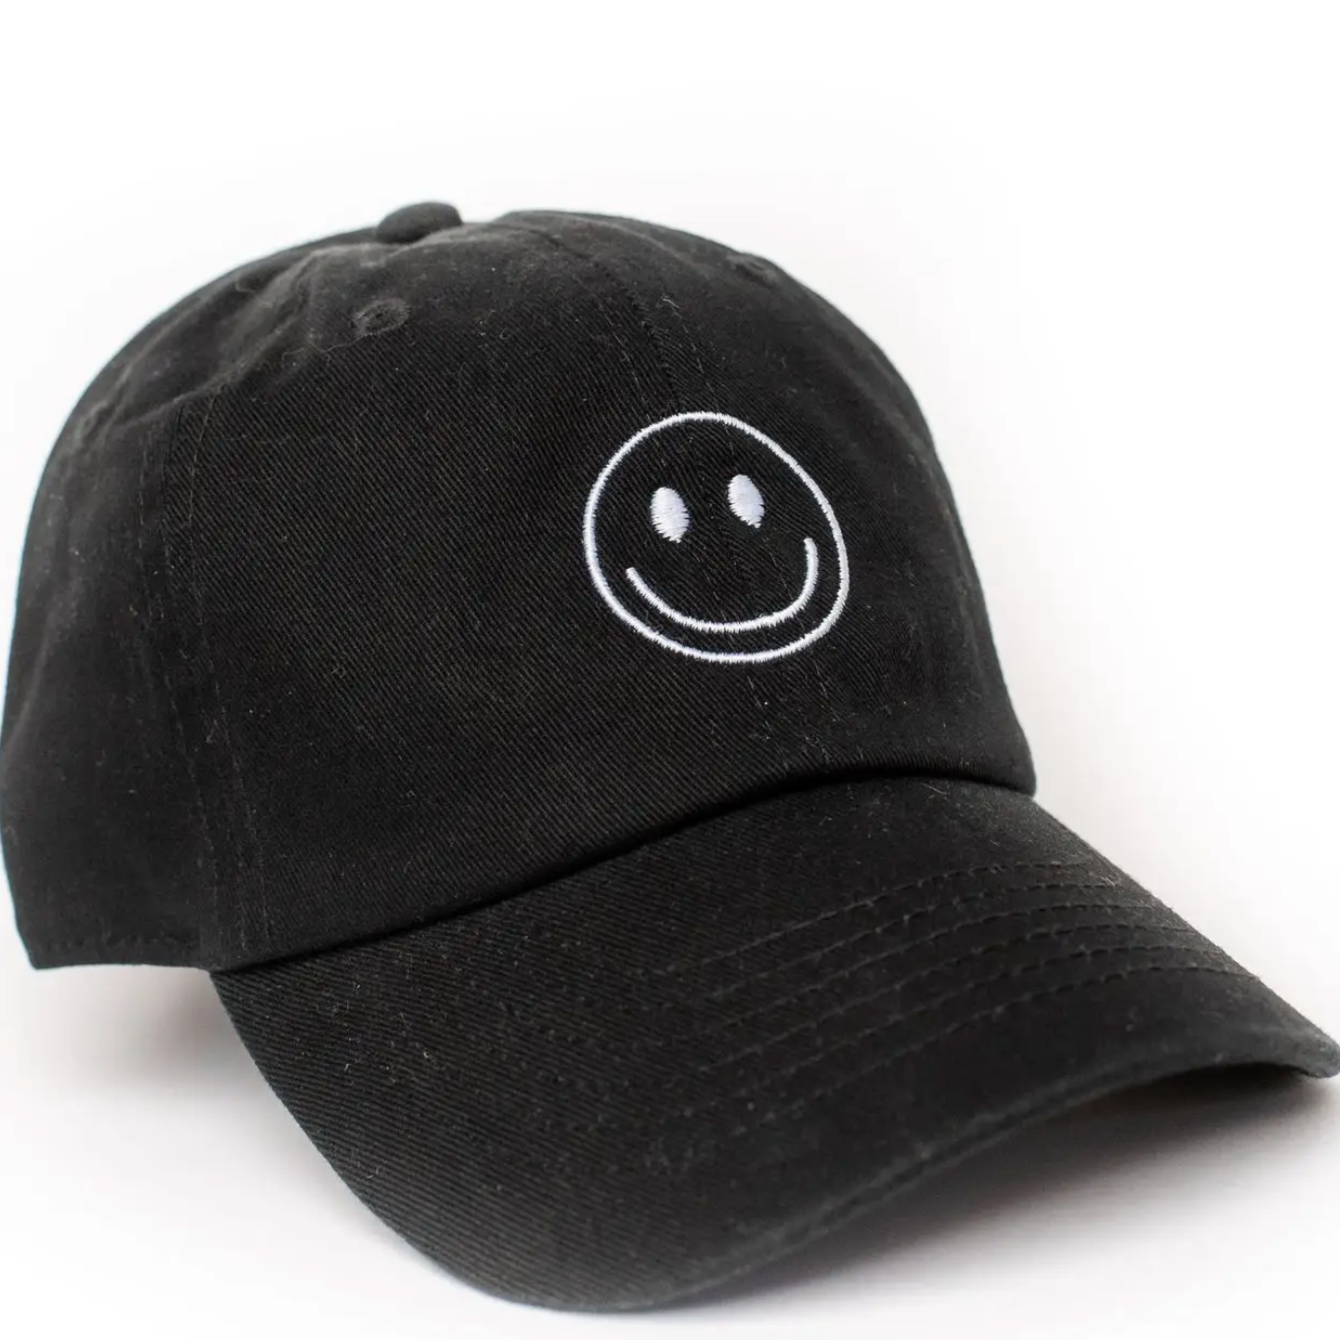 smiley face hat in black